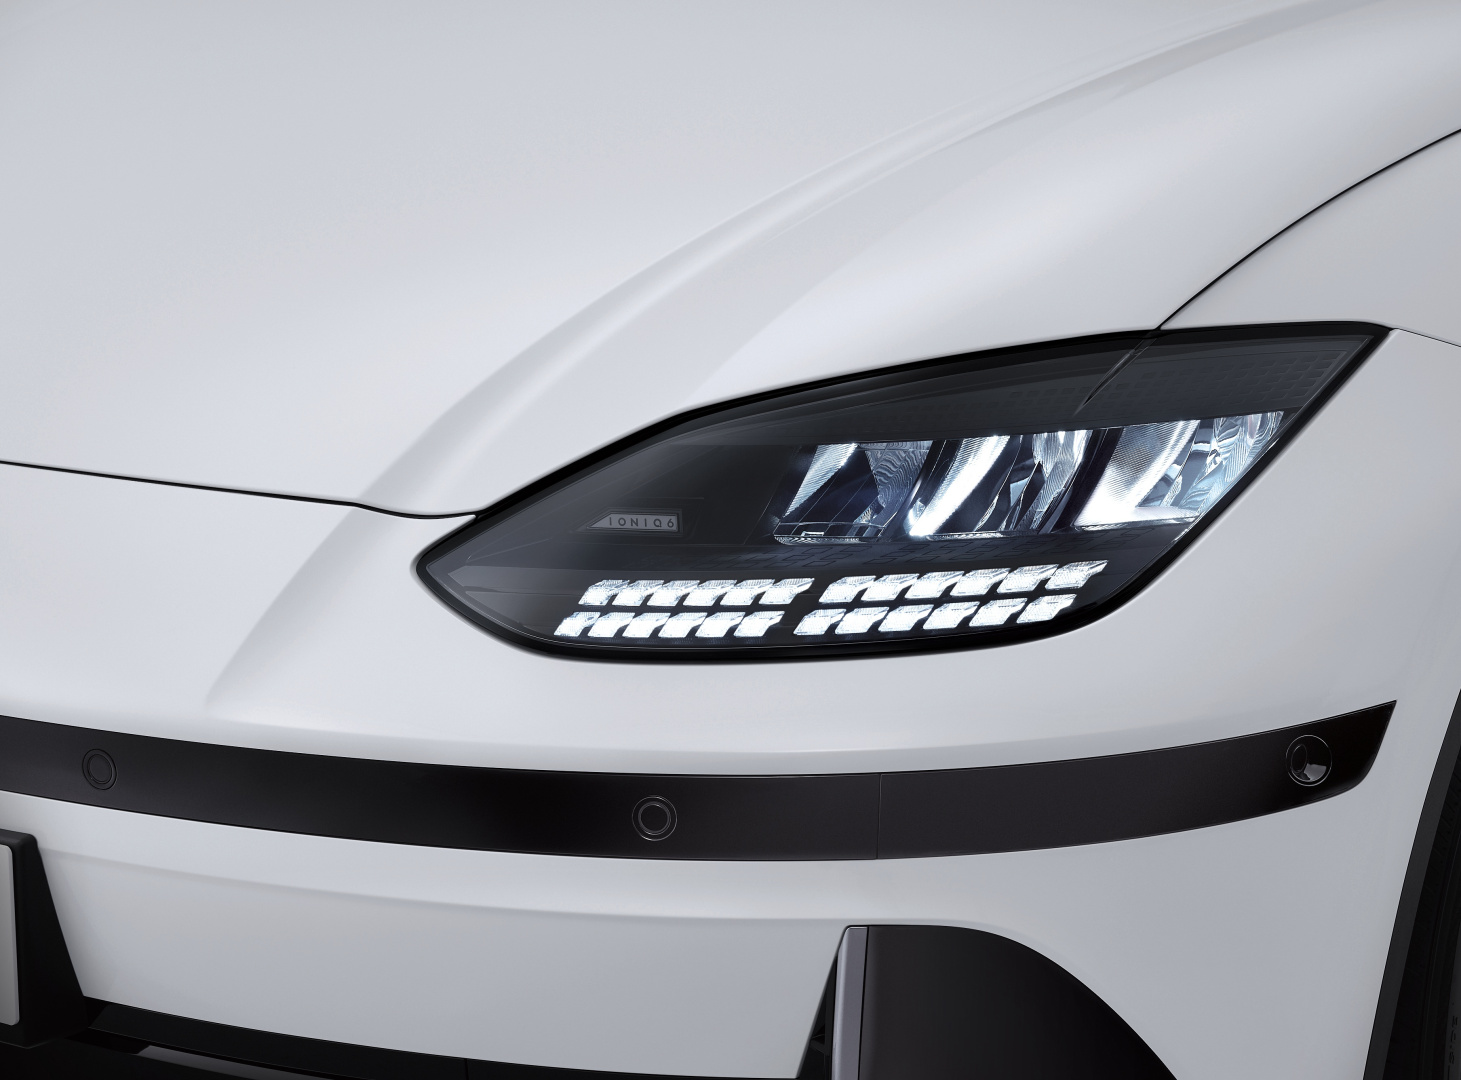 SMALL_2.首次導入IFS智慧動態頭燈照明系統，自動偵測周圍車輛並迅速變更燈型調節照明，提升行車的安全性同時保有清晰的行車視野